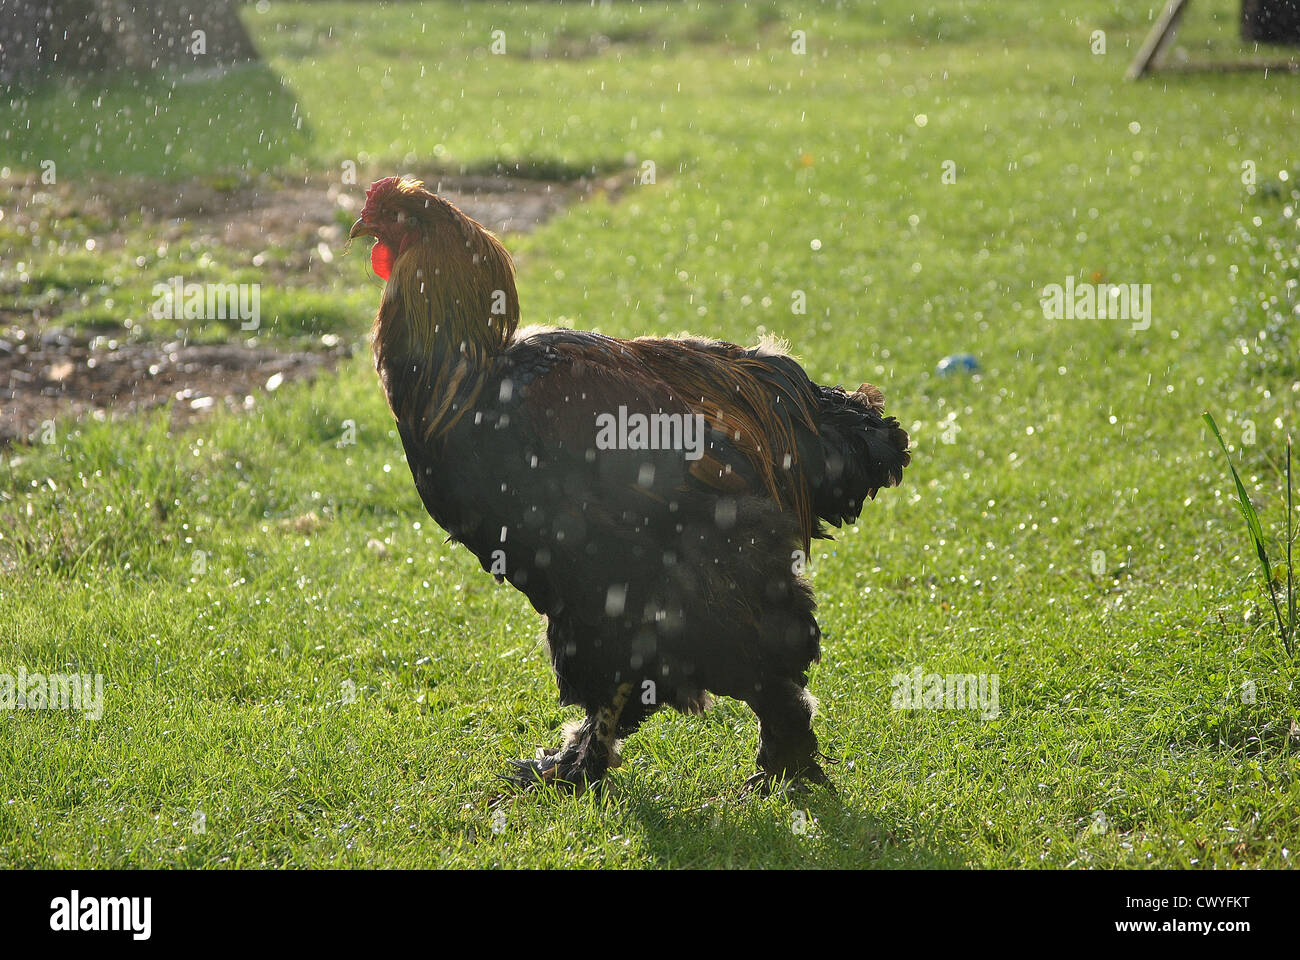 Gold Brahma Chicken in the rain Stock Photo